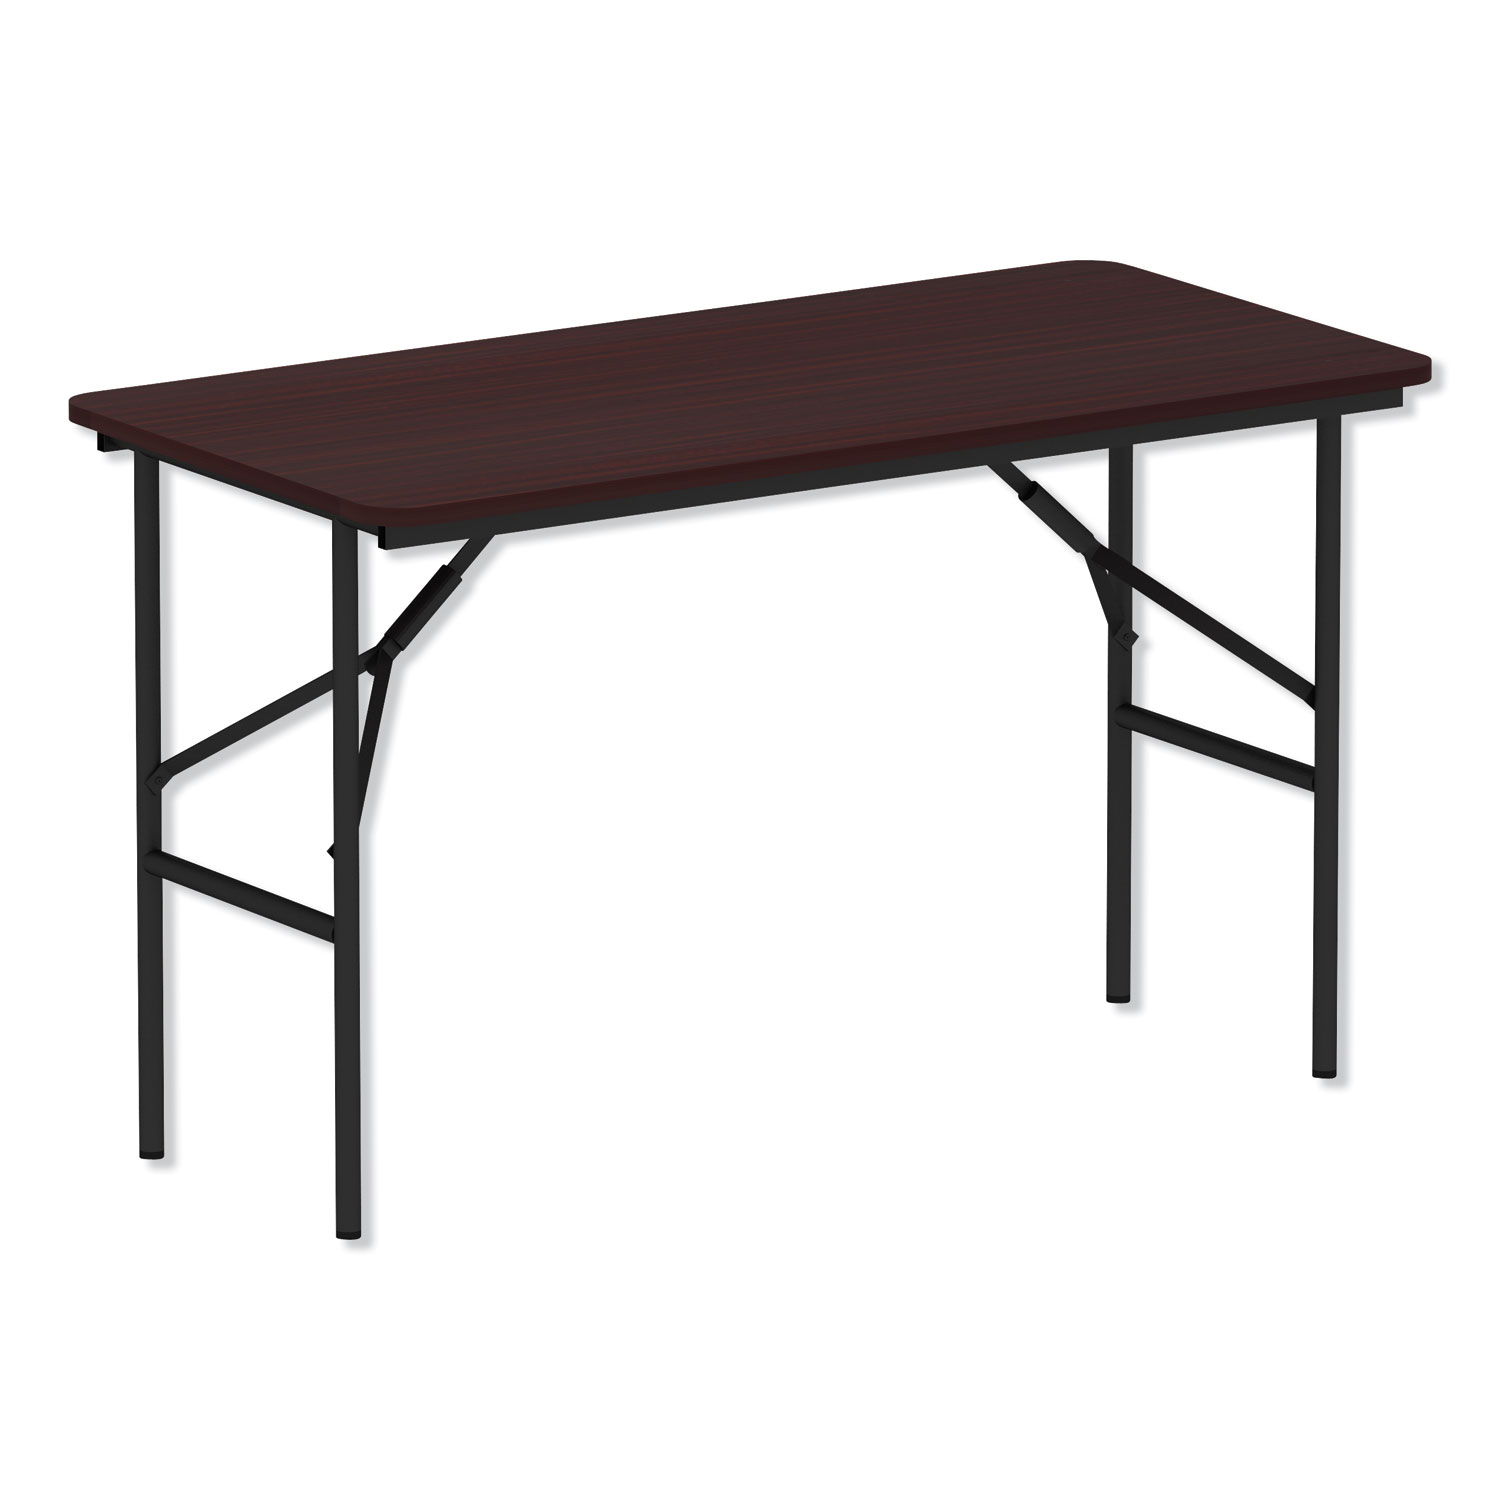  Alera FT724824MY Wood Folding Table, Rectangular, 48w x 23 7/8d x 29h, Mahogany (ALEFT724824MY) 